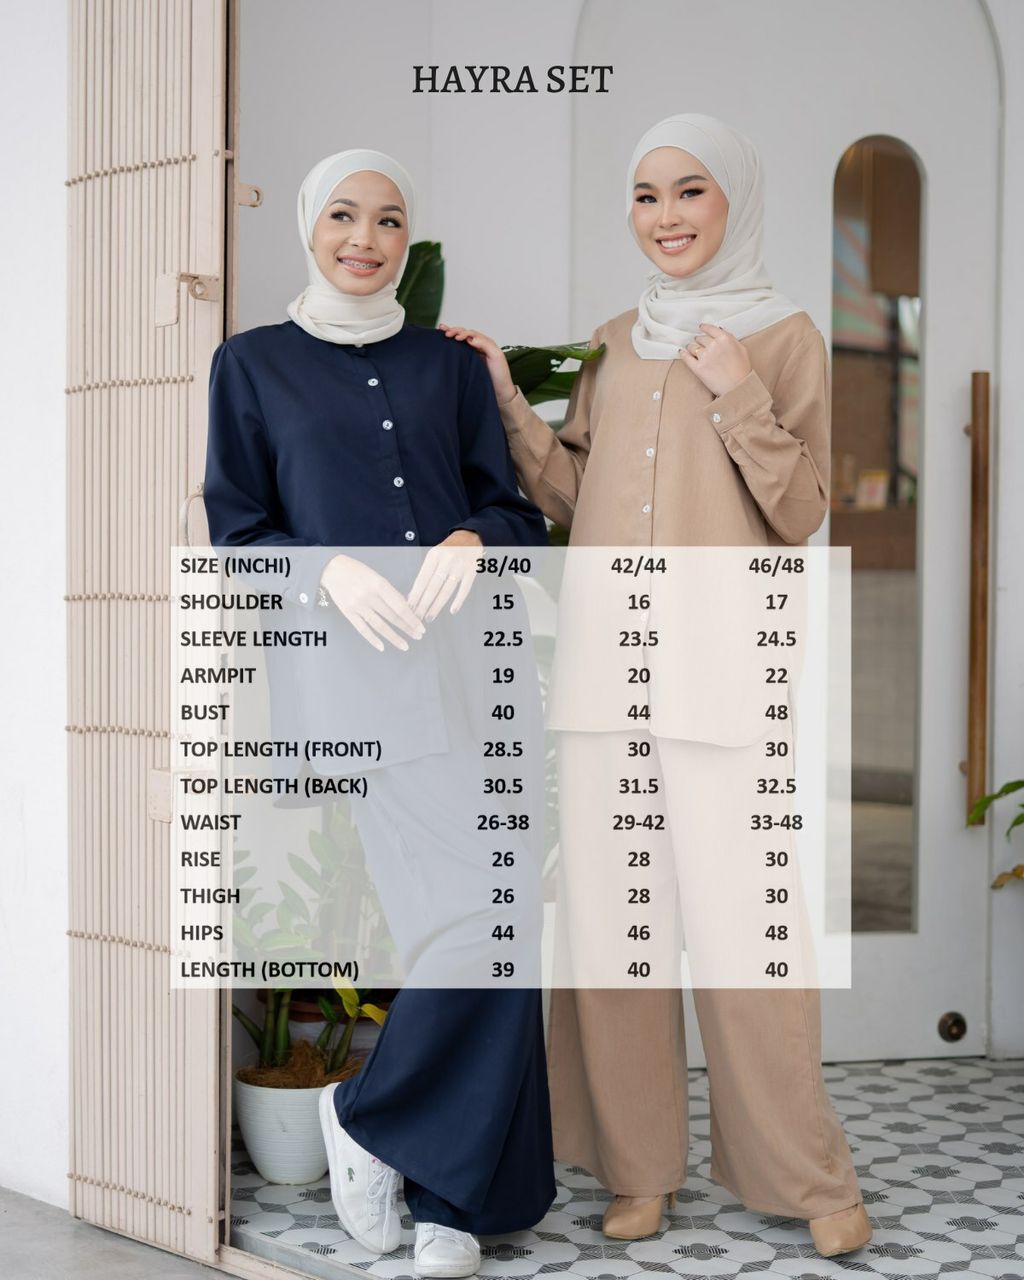 haura-wear-cotton-baju-muslimah-set-seluar-suit-muslimah-set-baju-dan-seluar-muslimah-palazzo (8).jpg